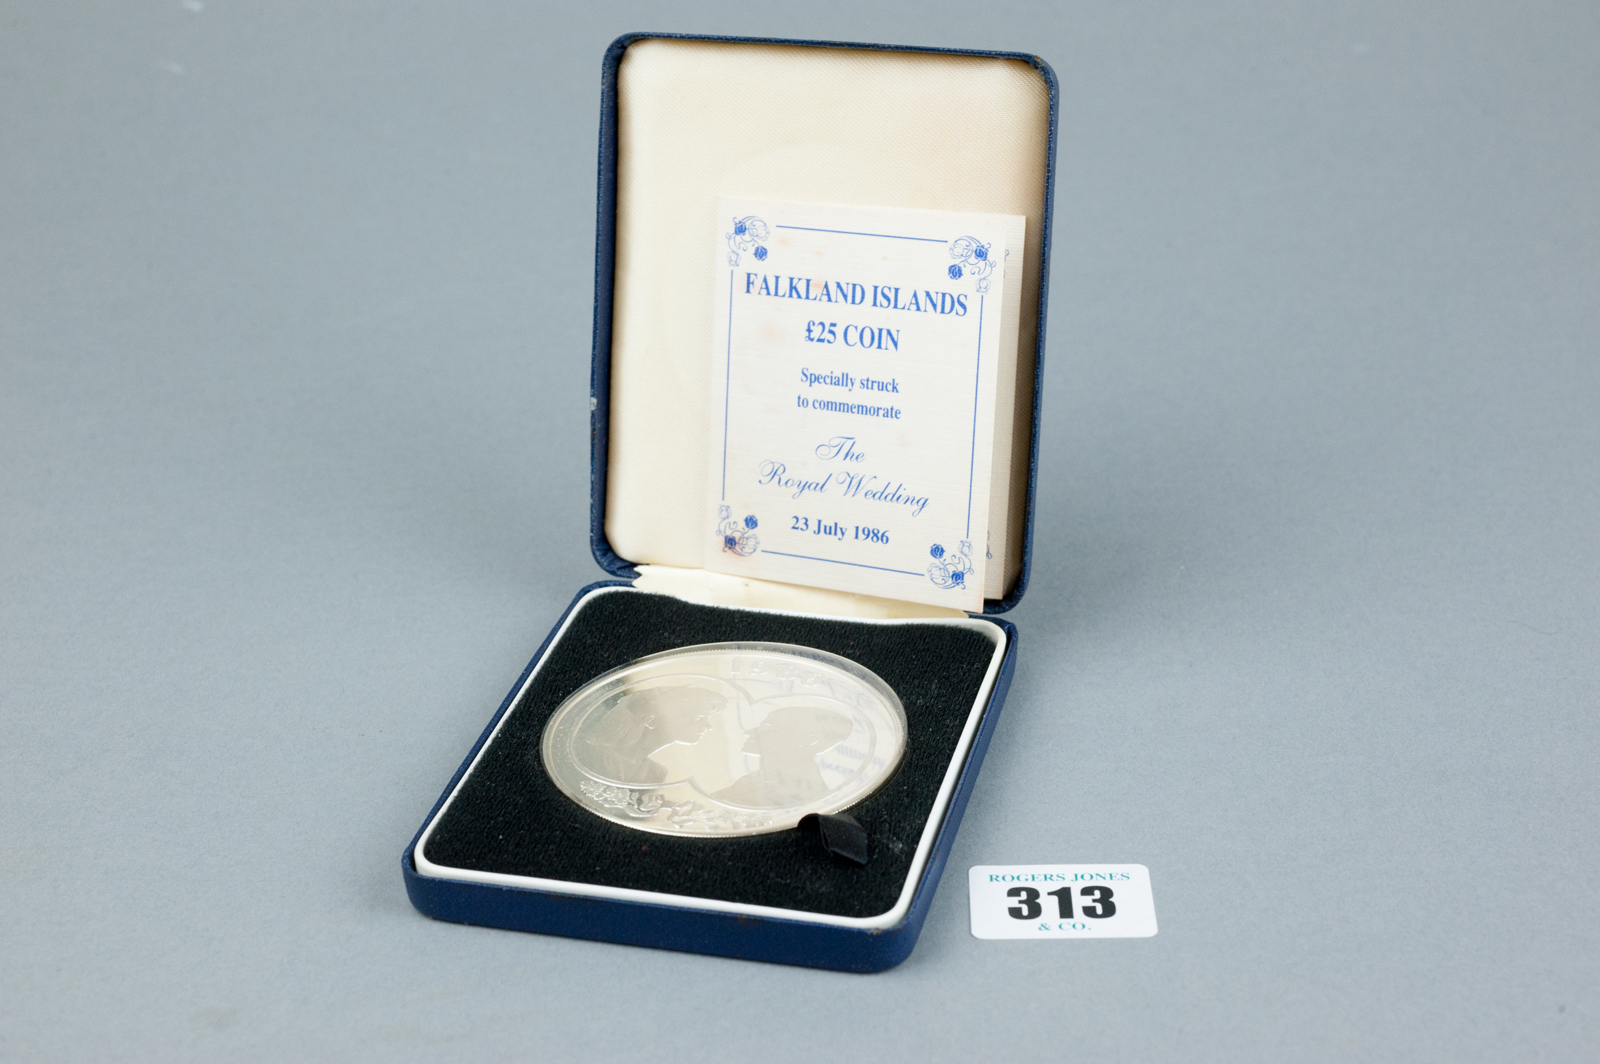 A cased Falkland Islands twenty five pound commemorative medallion coin - 1986 The Royal Wedding